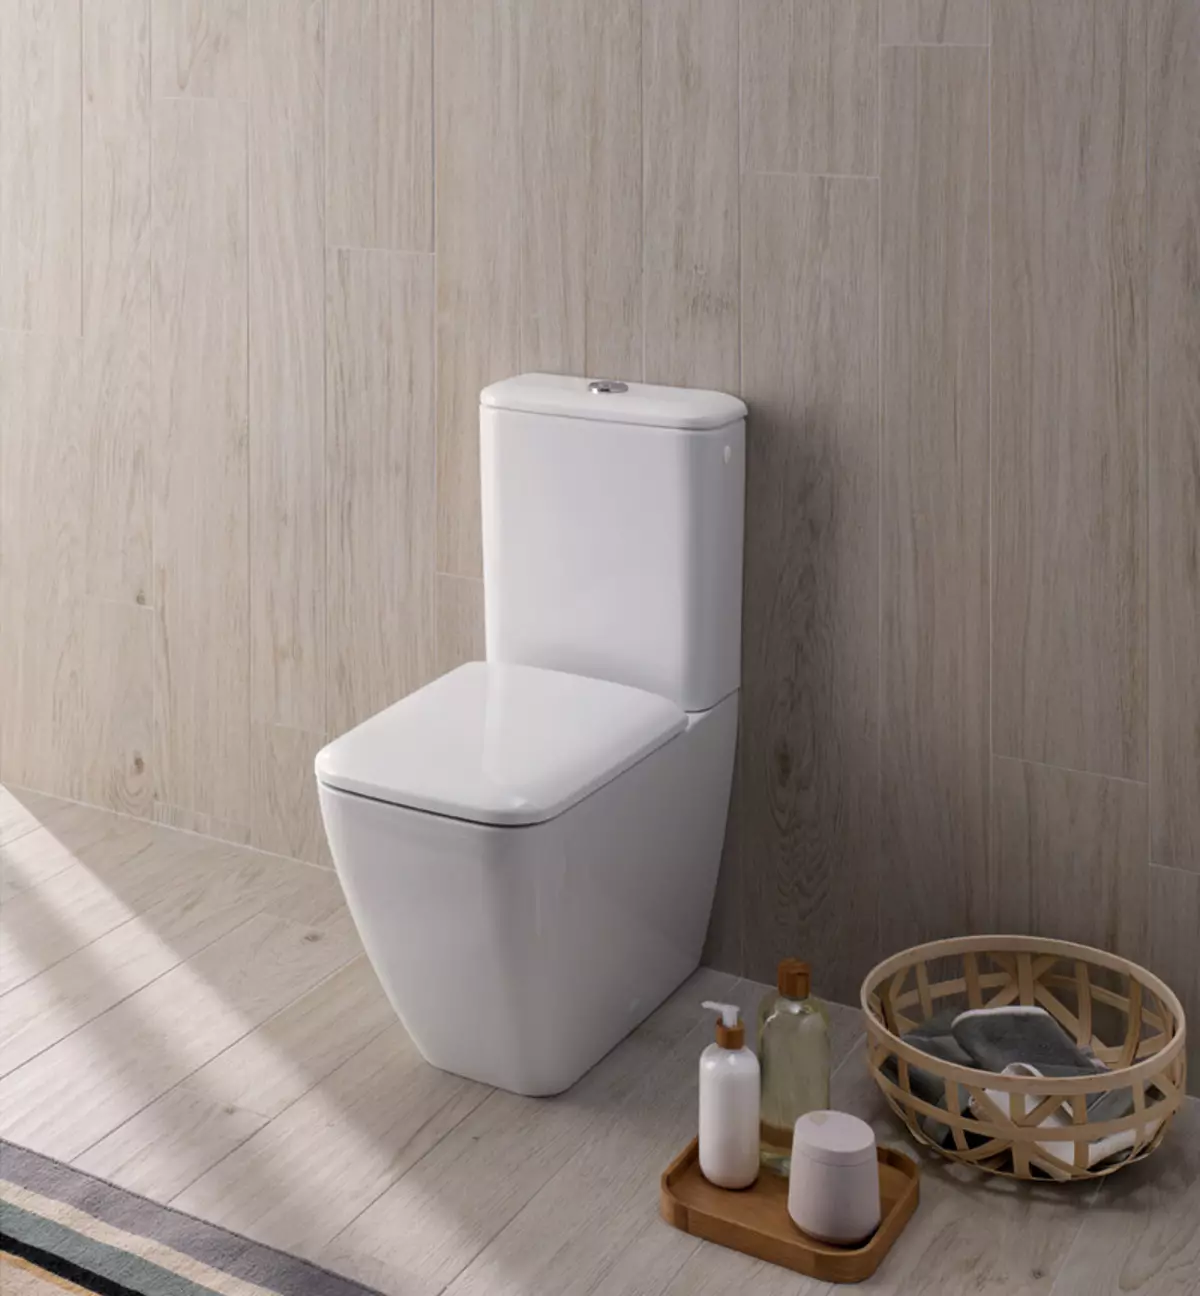 Toilet Lantai Tanpa Bajak: Model apa tanpa pelek lebih baik? Memilih mangkuk toilet dengan tangki dan tanpanya, dari porselen atau makanan. Peringkat 10533_22